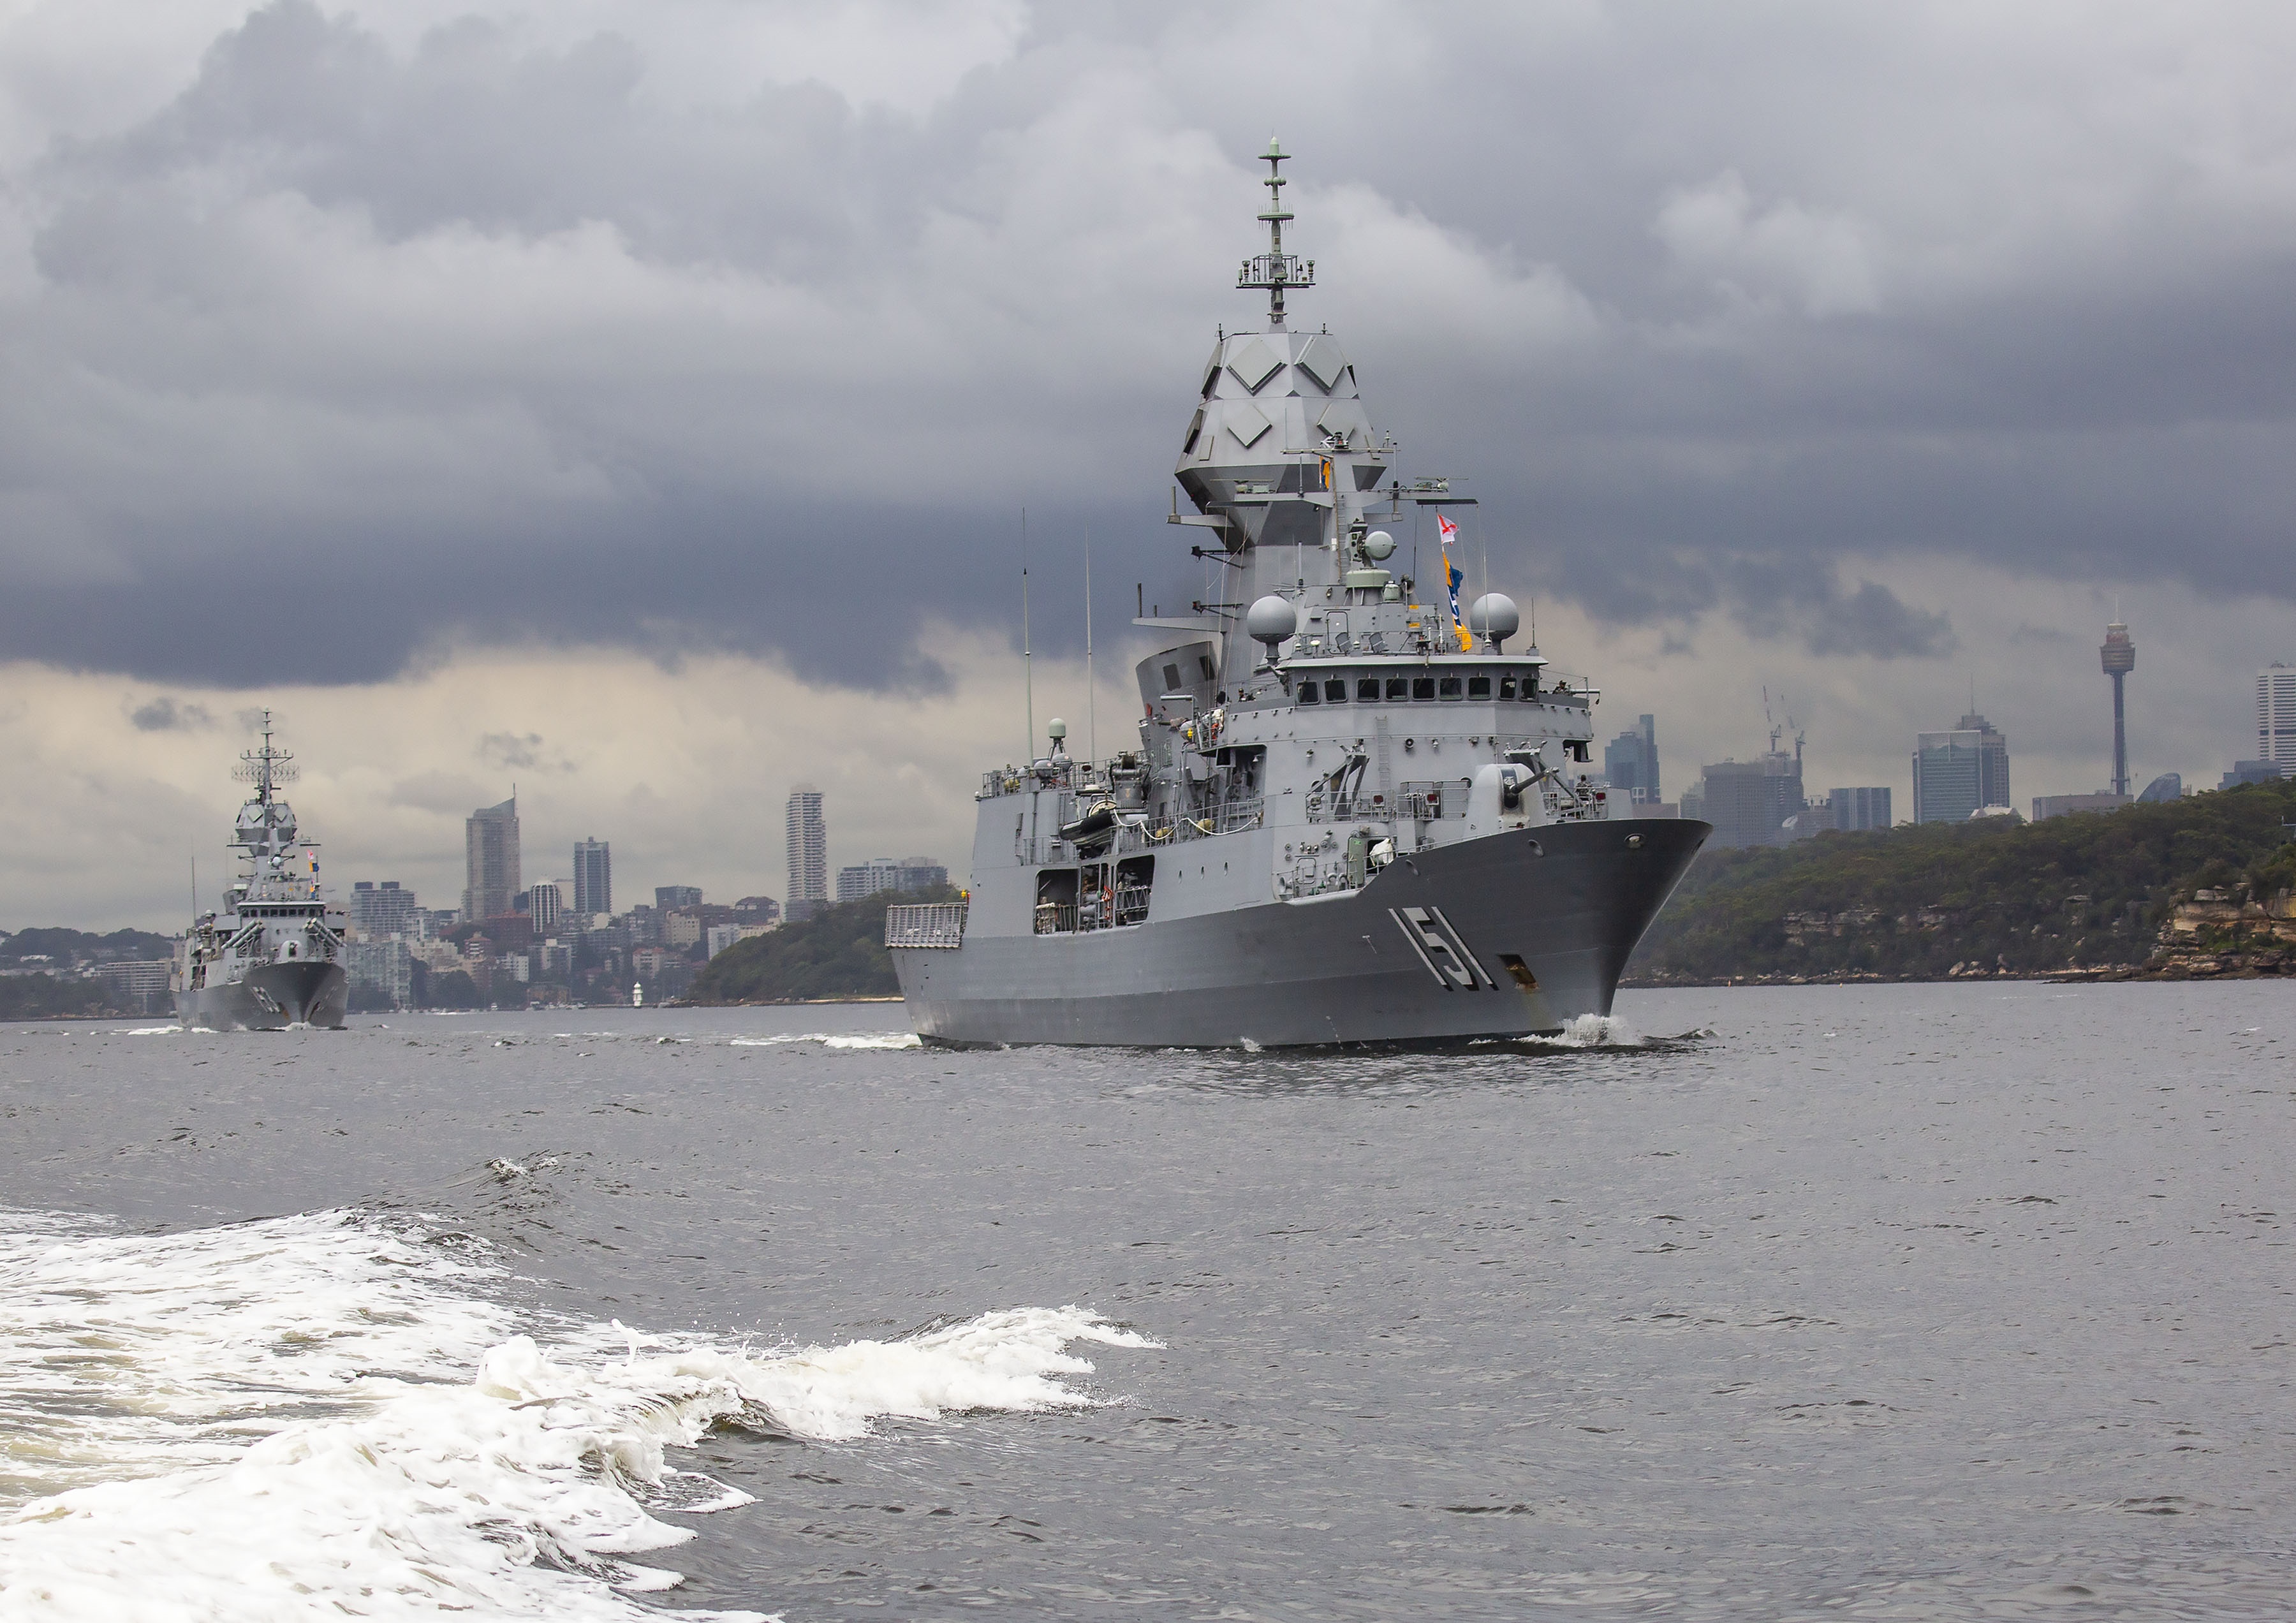 HMAS Arunta followed by HMAS Stuart depart Sydney Harbour for the Royal Australian Navy's Fleet Certification Period, 2020.